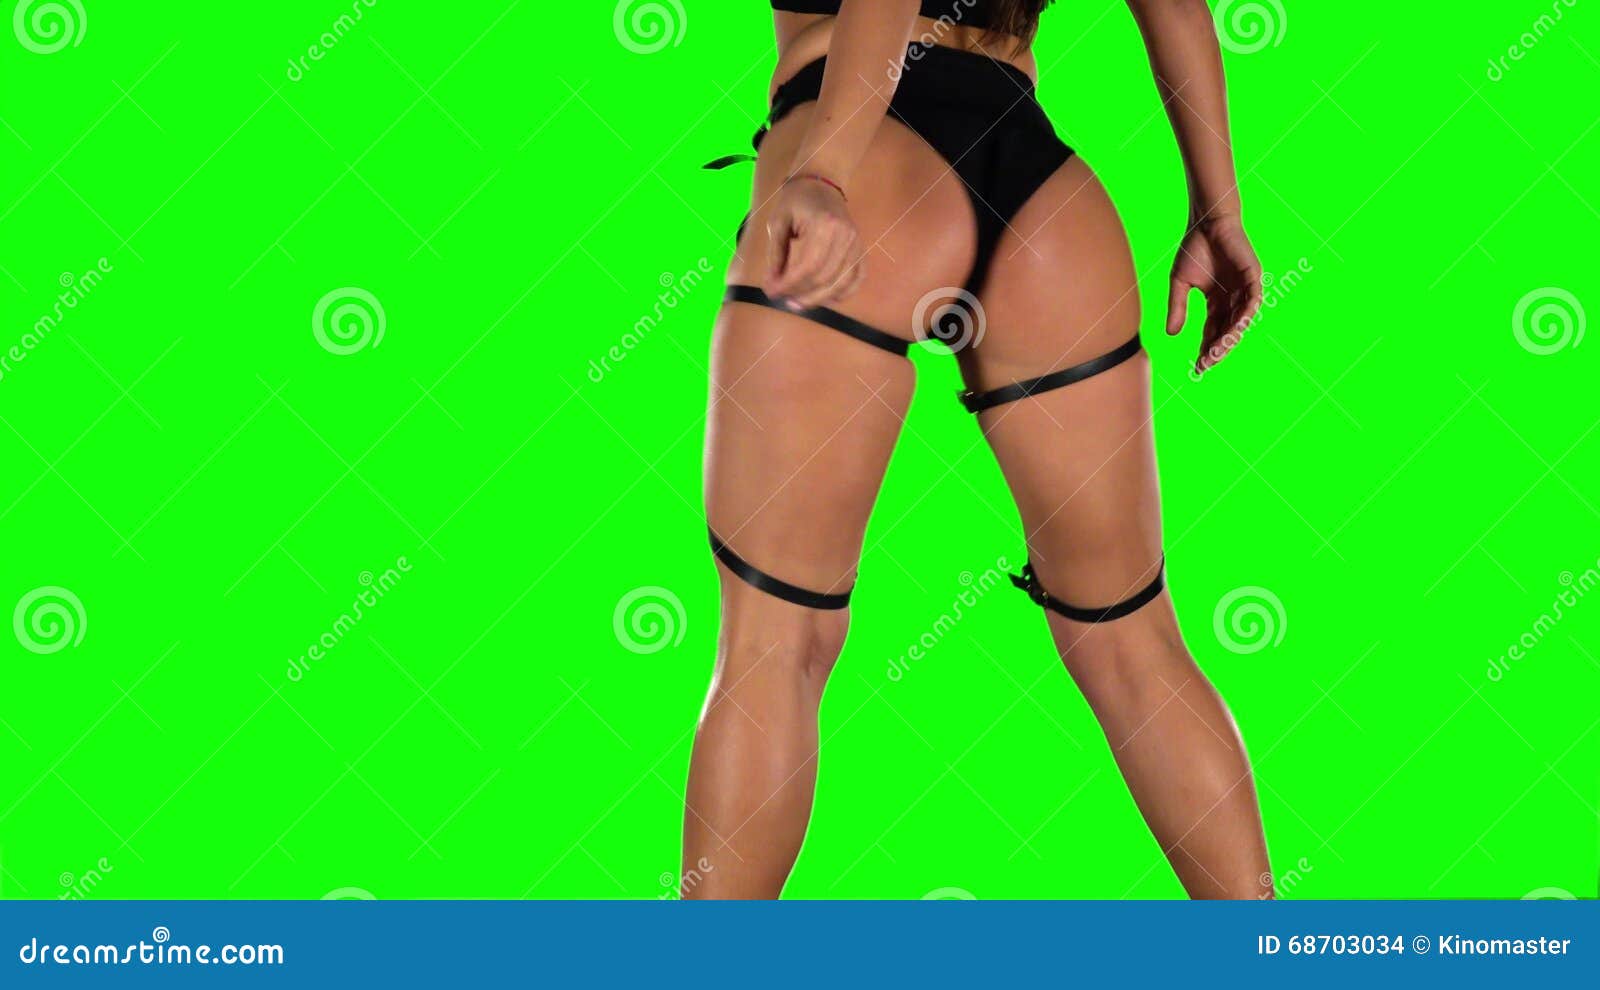 charlotte woodland recommends big butt teens twerking pic